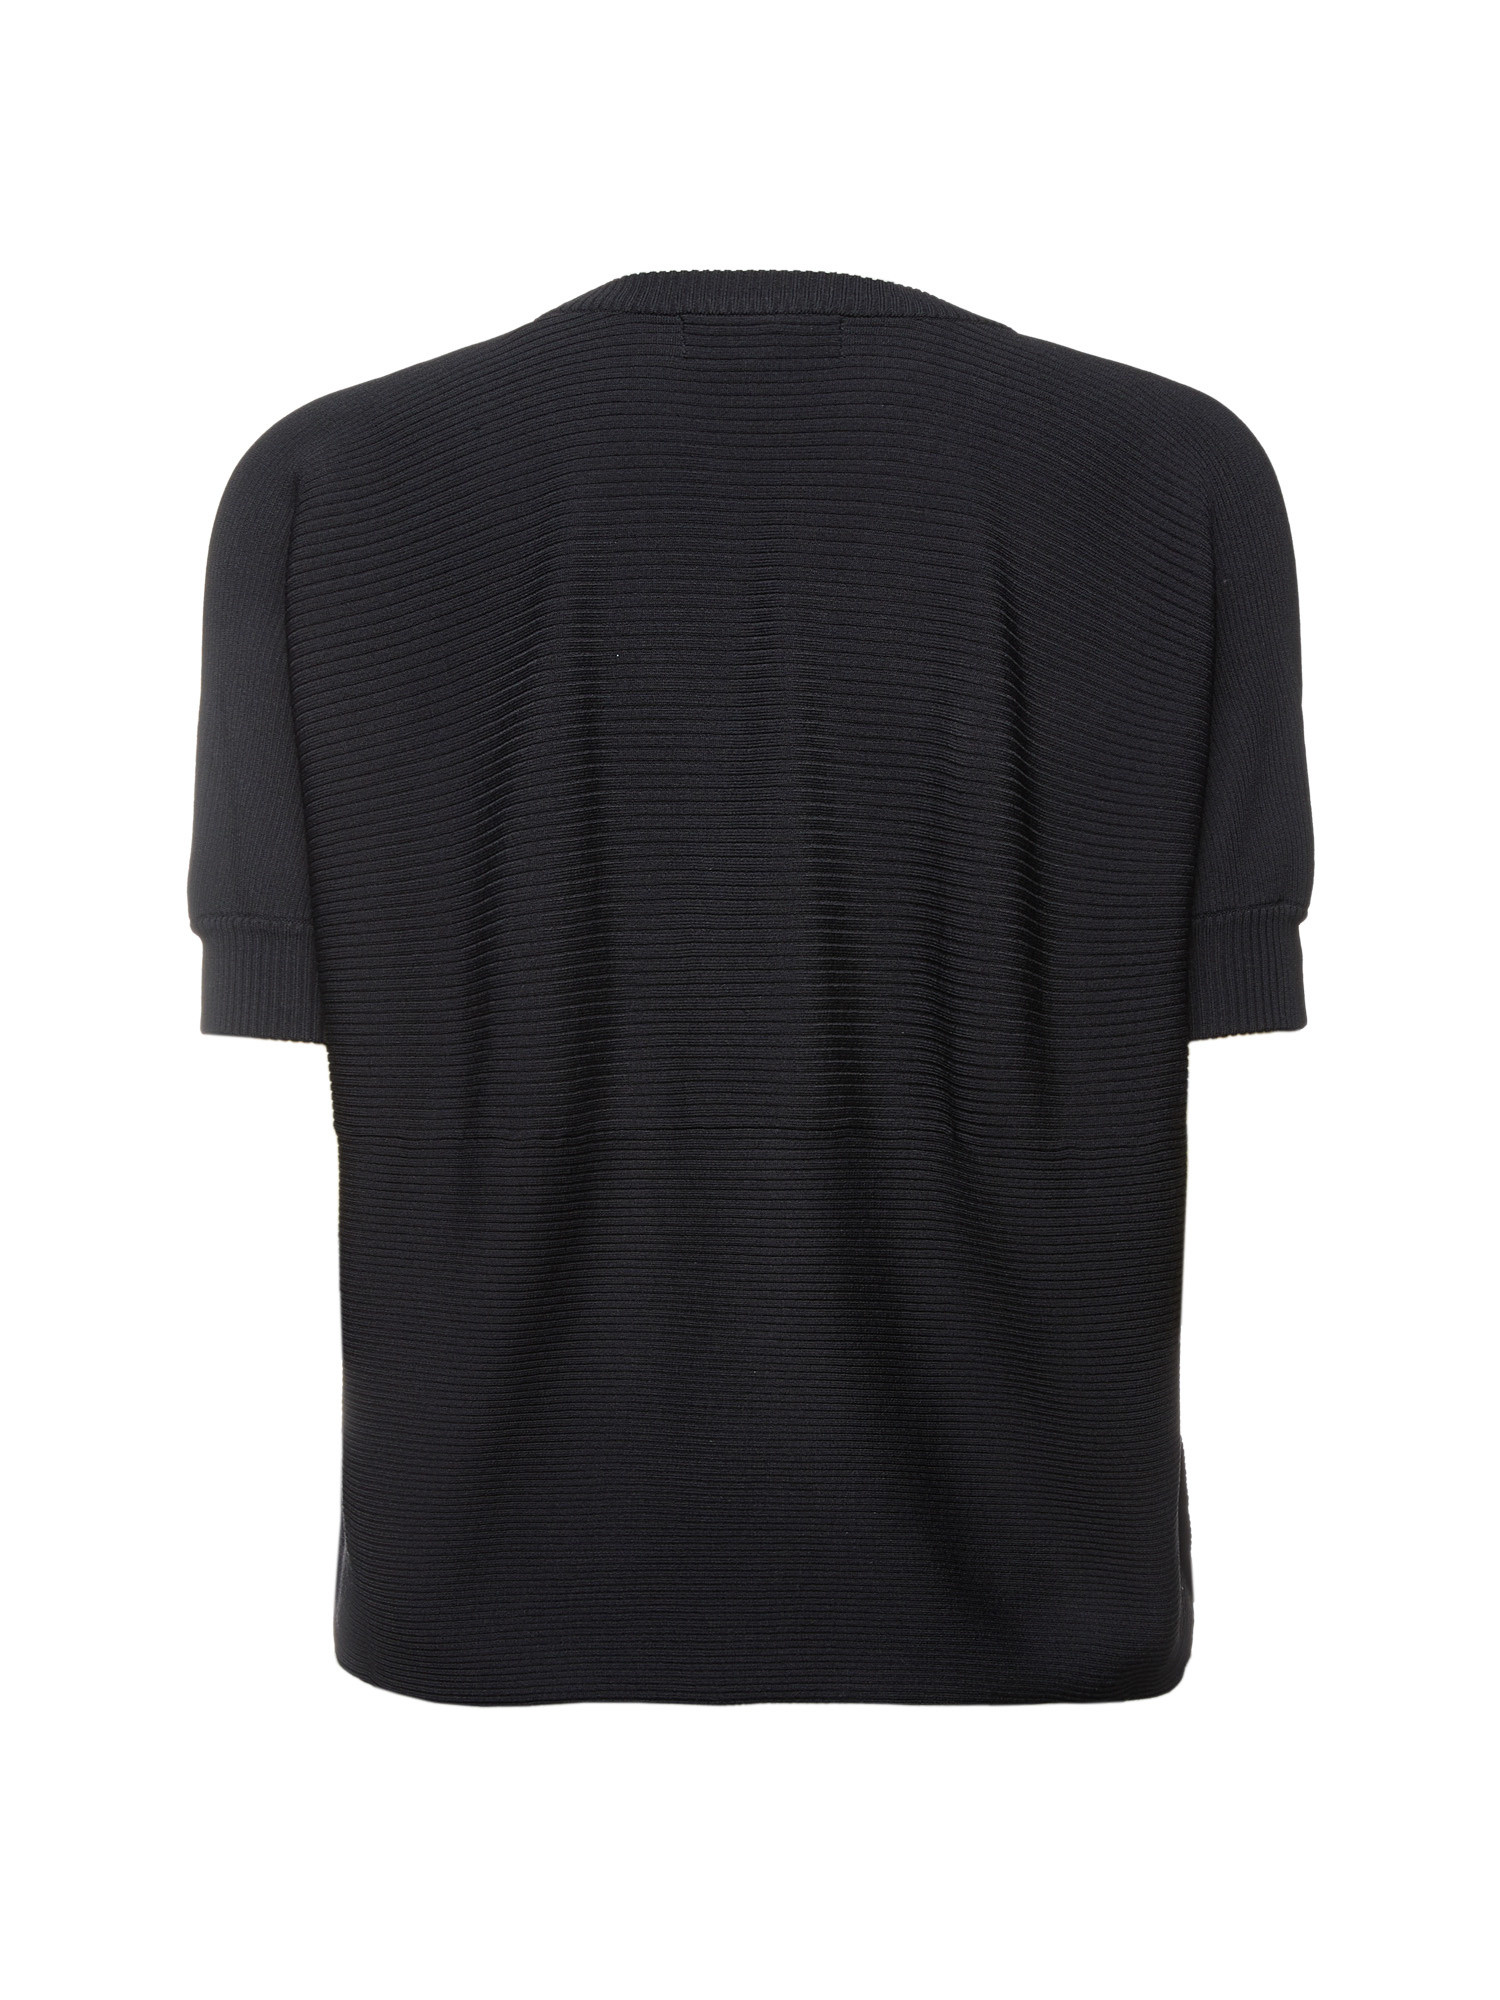 Armani Exchange - Ribbed sweater with logo, Black, large image number 1